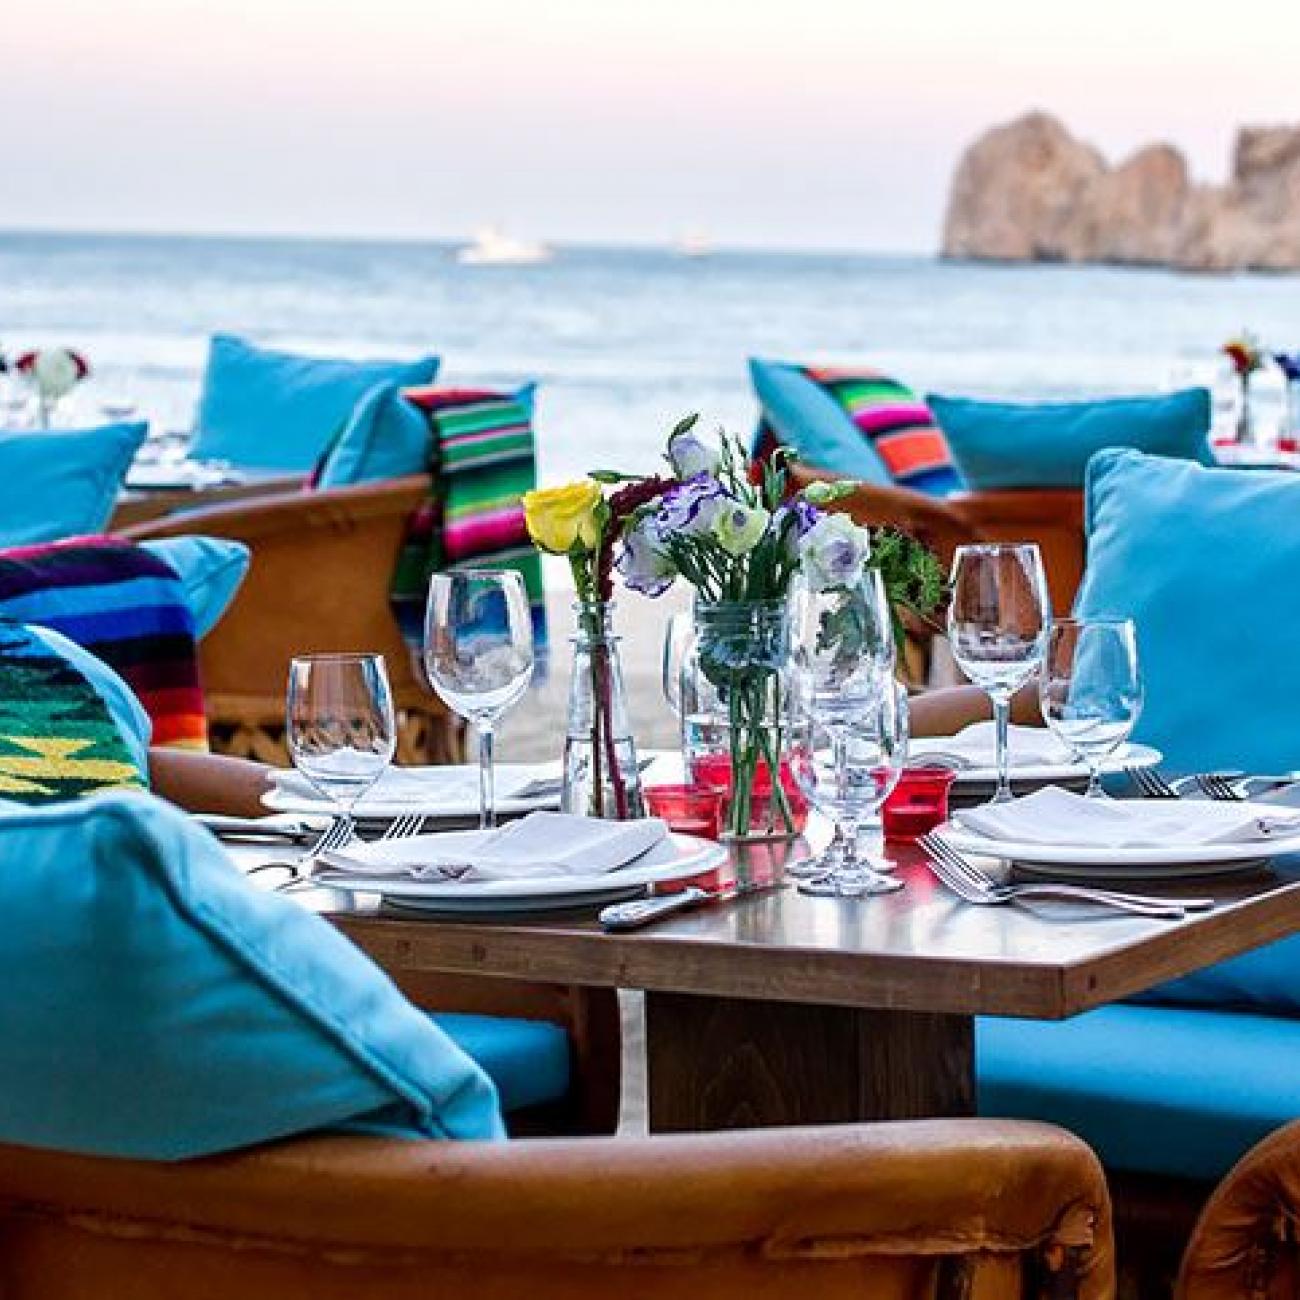 hacienda beach club dinner table by the ocean